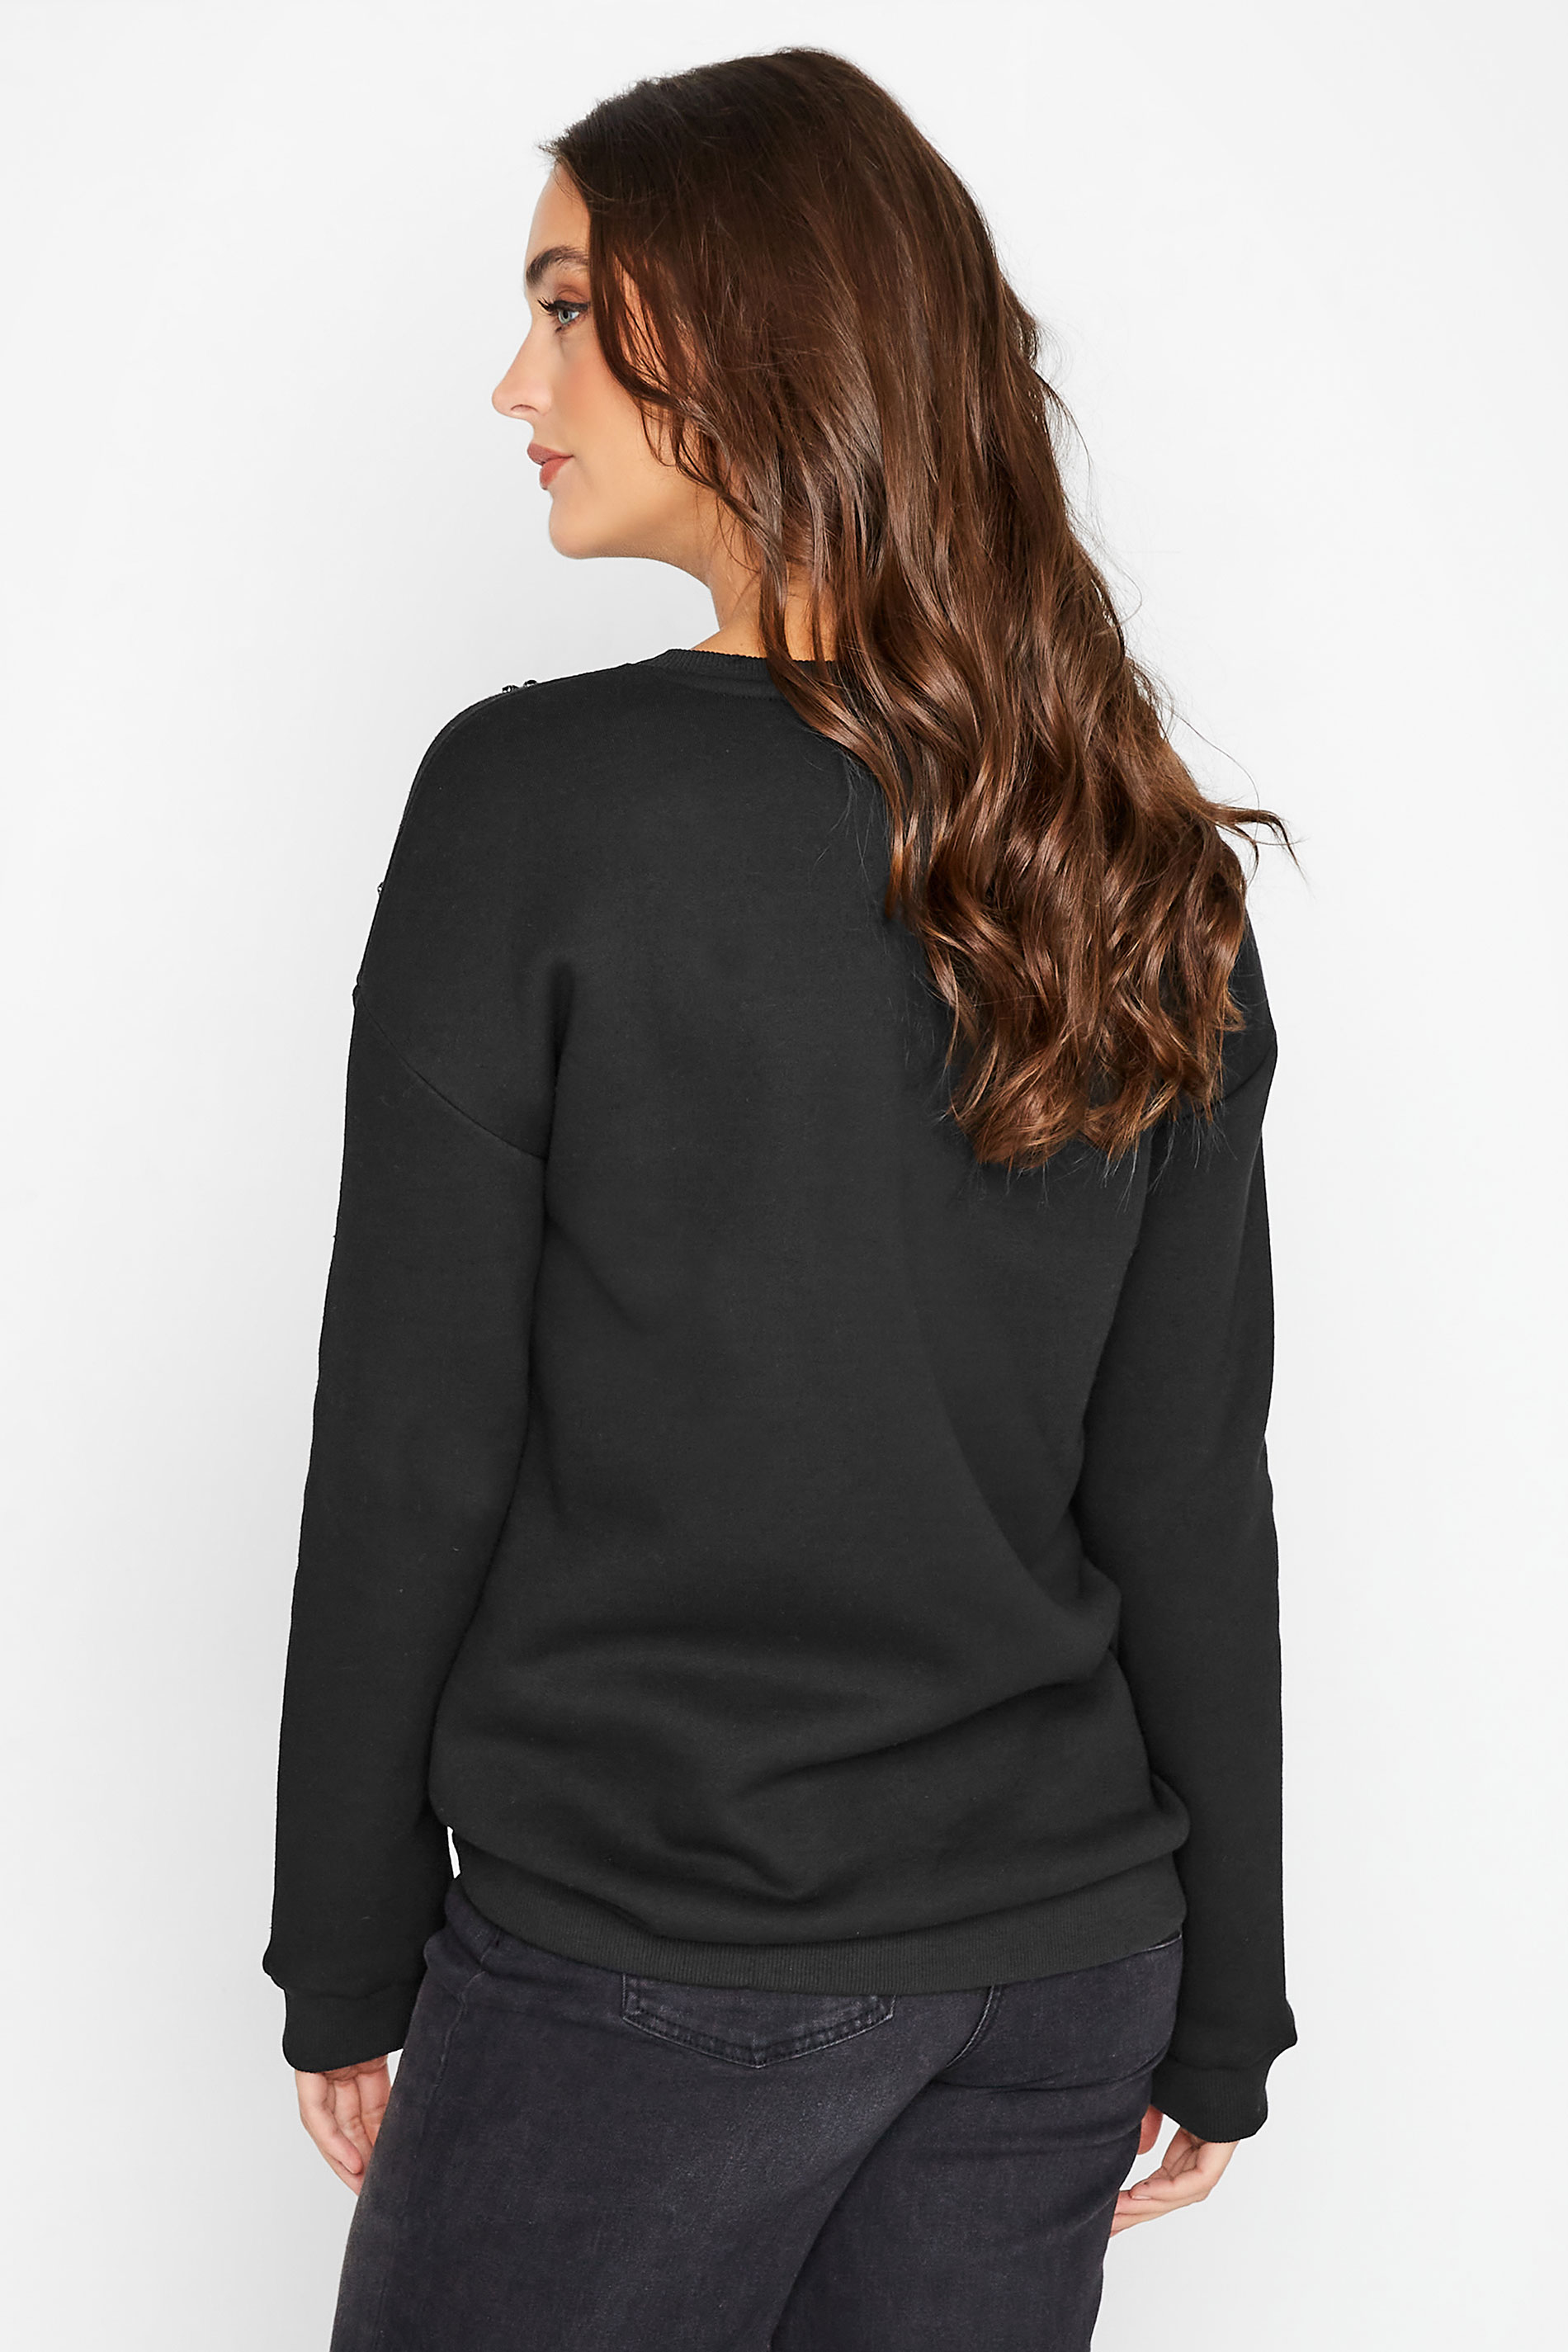 LTS Tall Women's Black Embellished Sweatshirt | Long Tall Sally 3